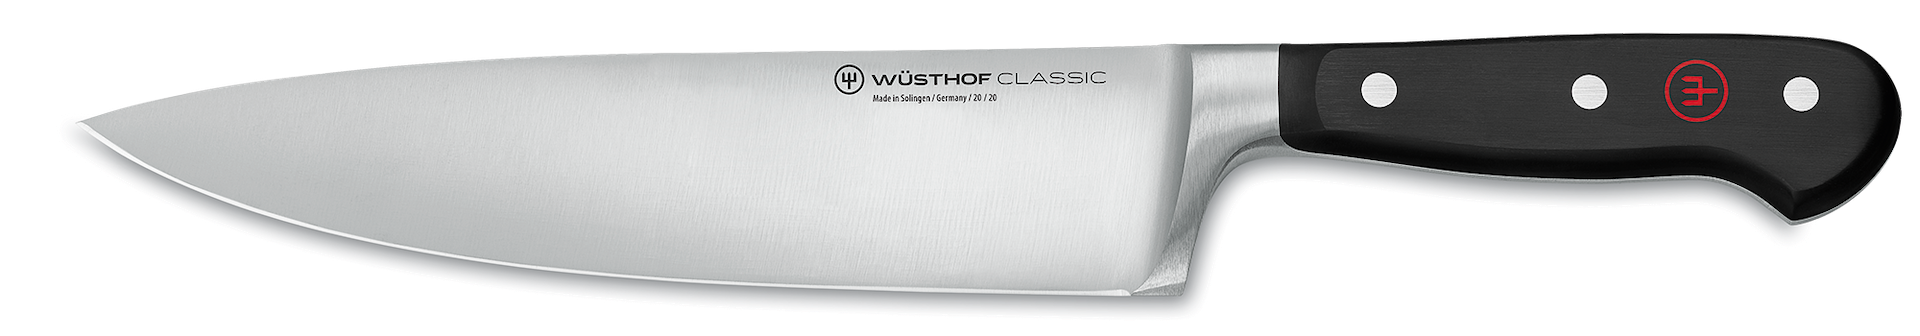 Wusthof Classic Six-Inch Utility Knife